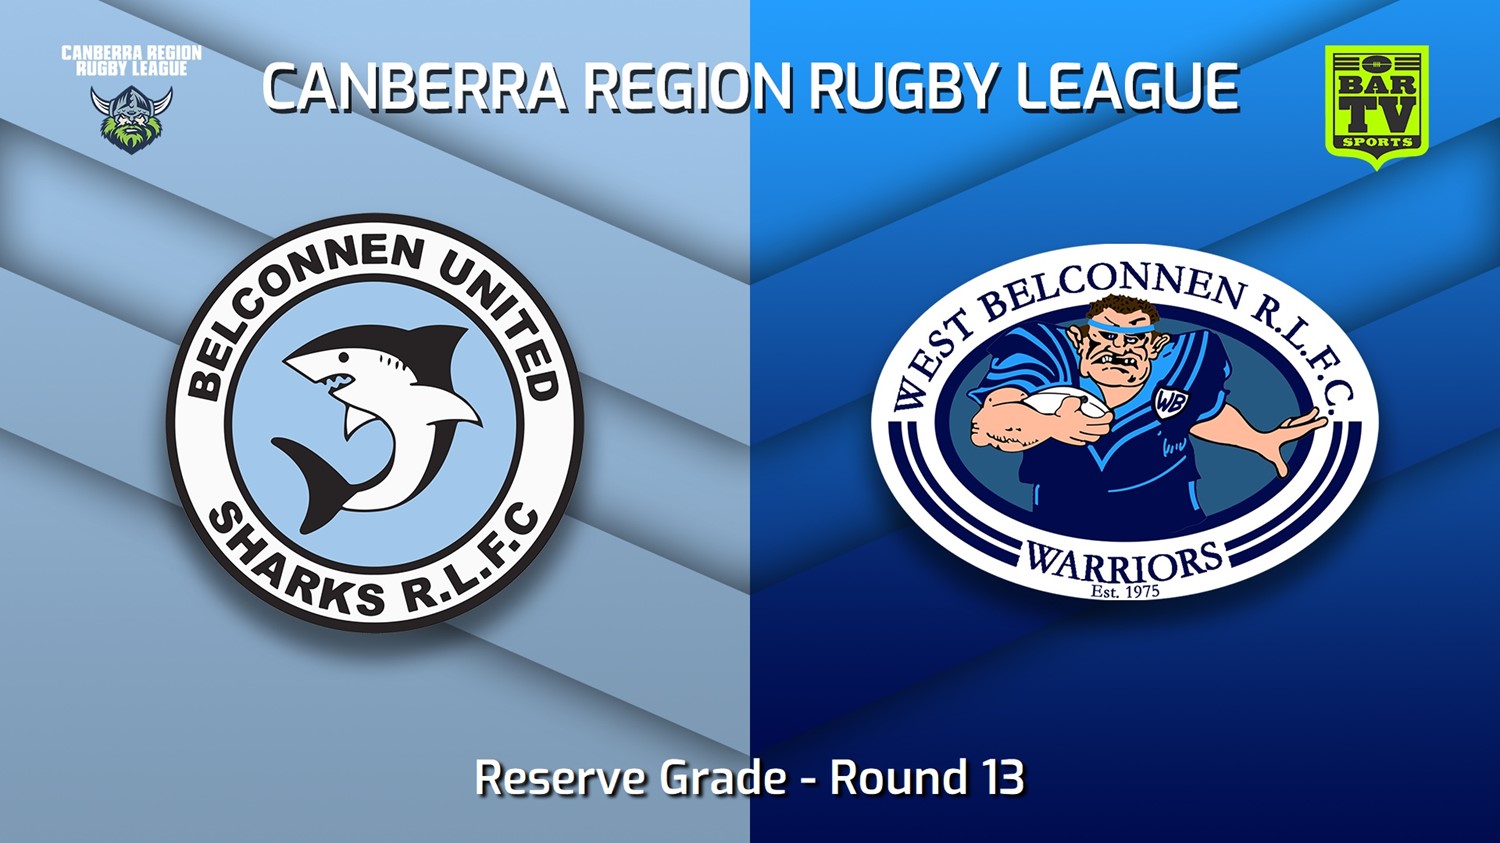 220716-Canberra Round 13 - Reserve Grade - Belconnen United Sharks v West Belconnen Warriors Minigame Slate Image